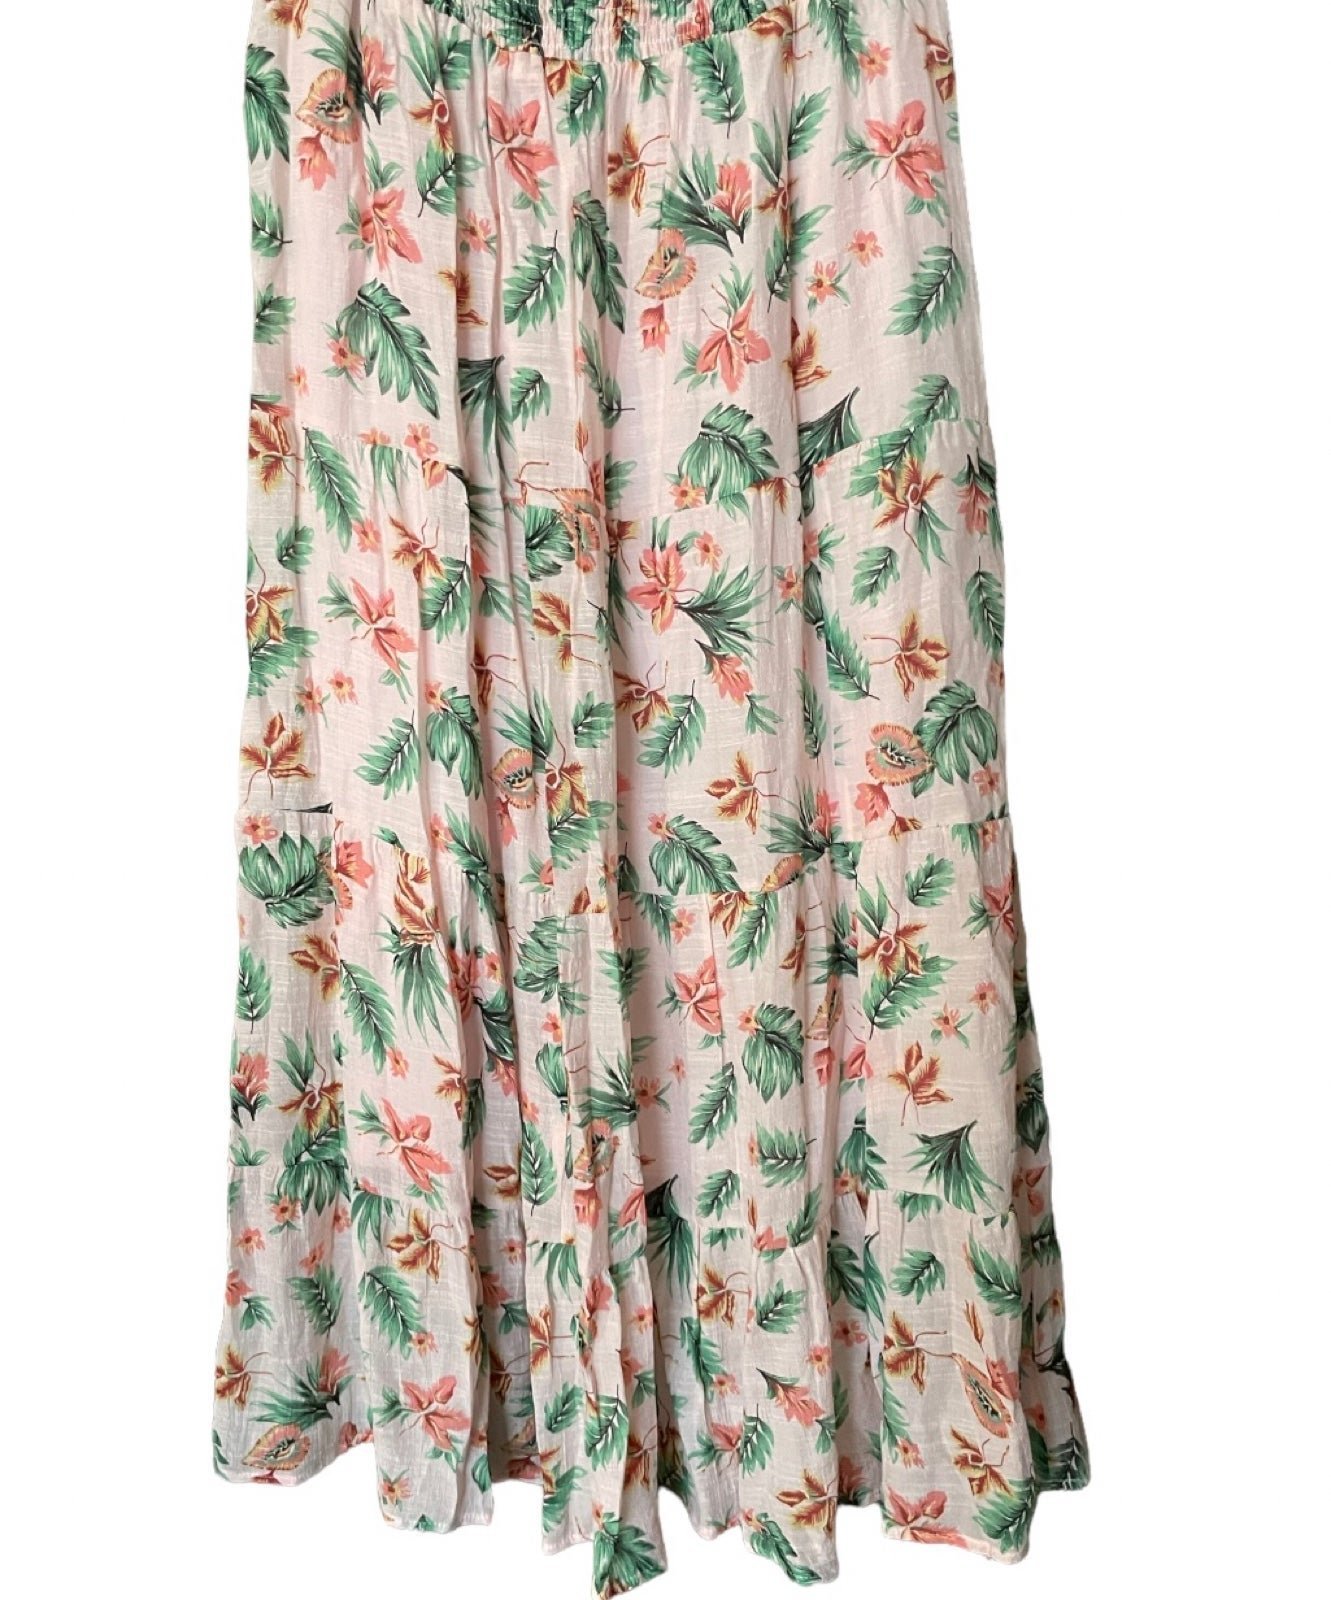 Gorgeous Boho Floral Skirt fnyPYjf3v New Style